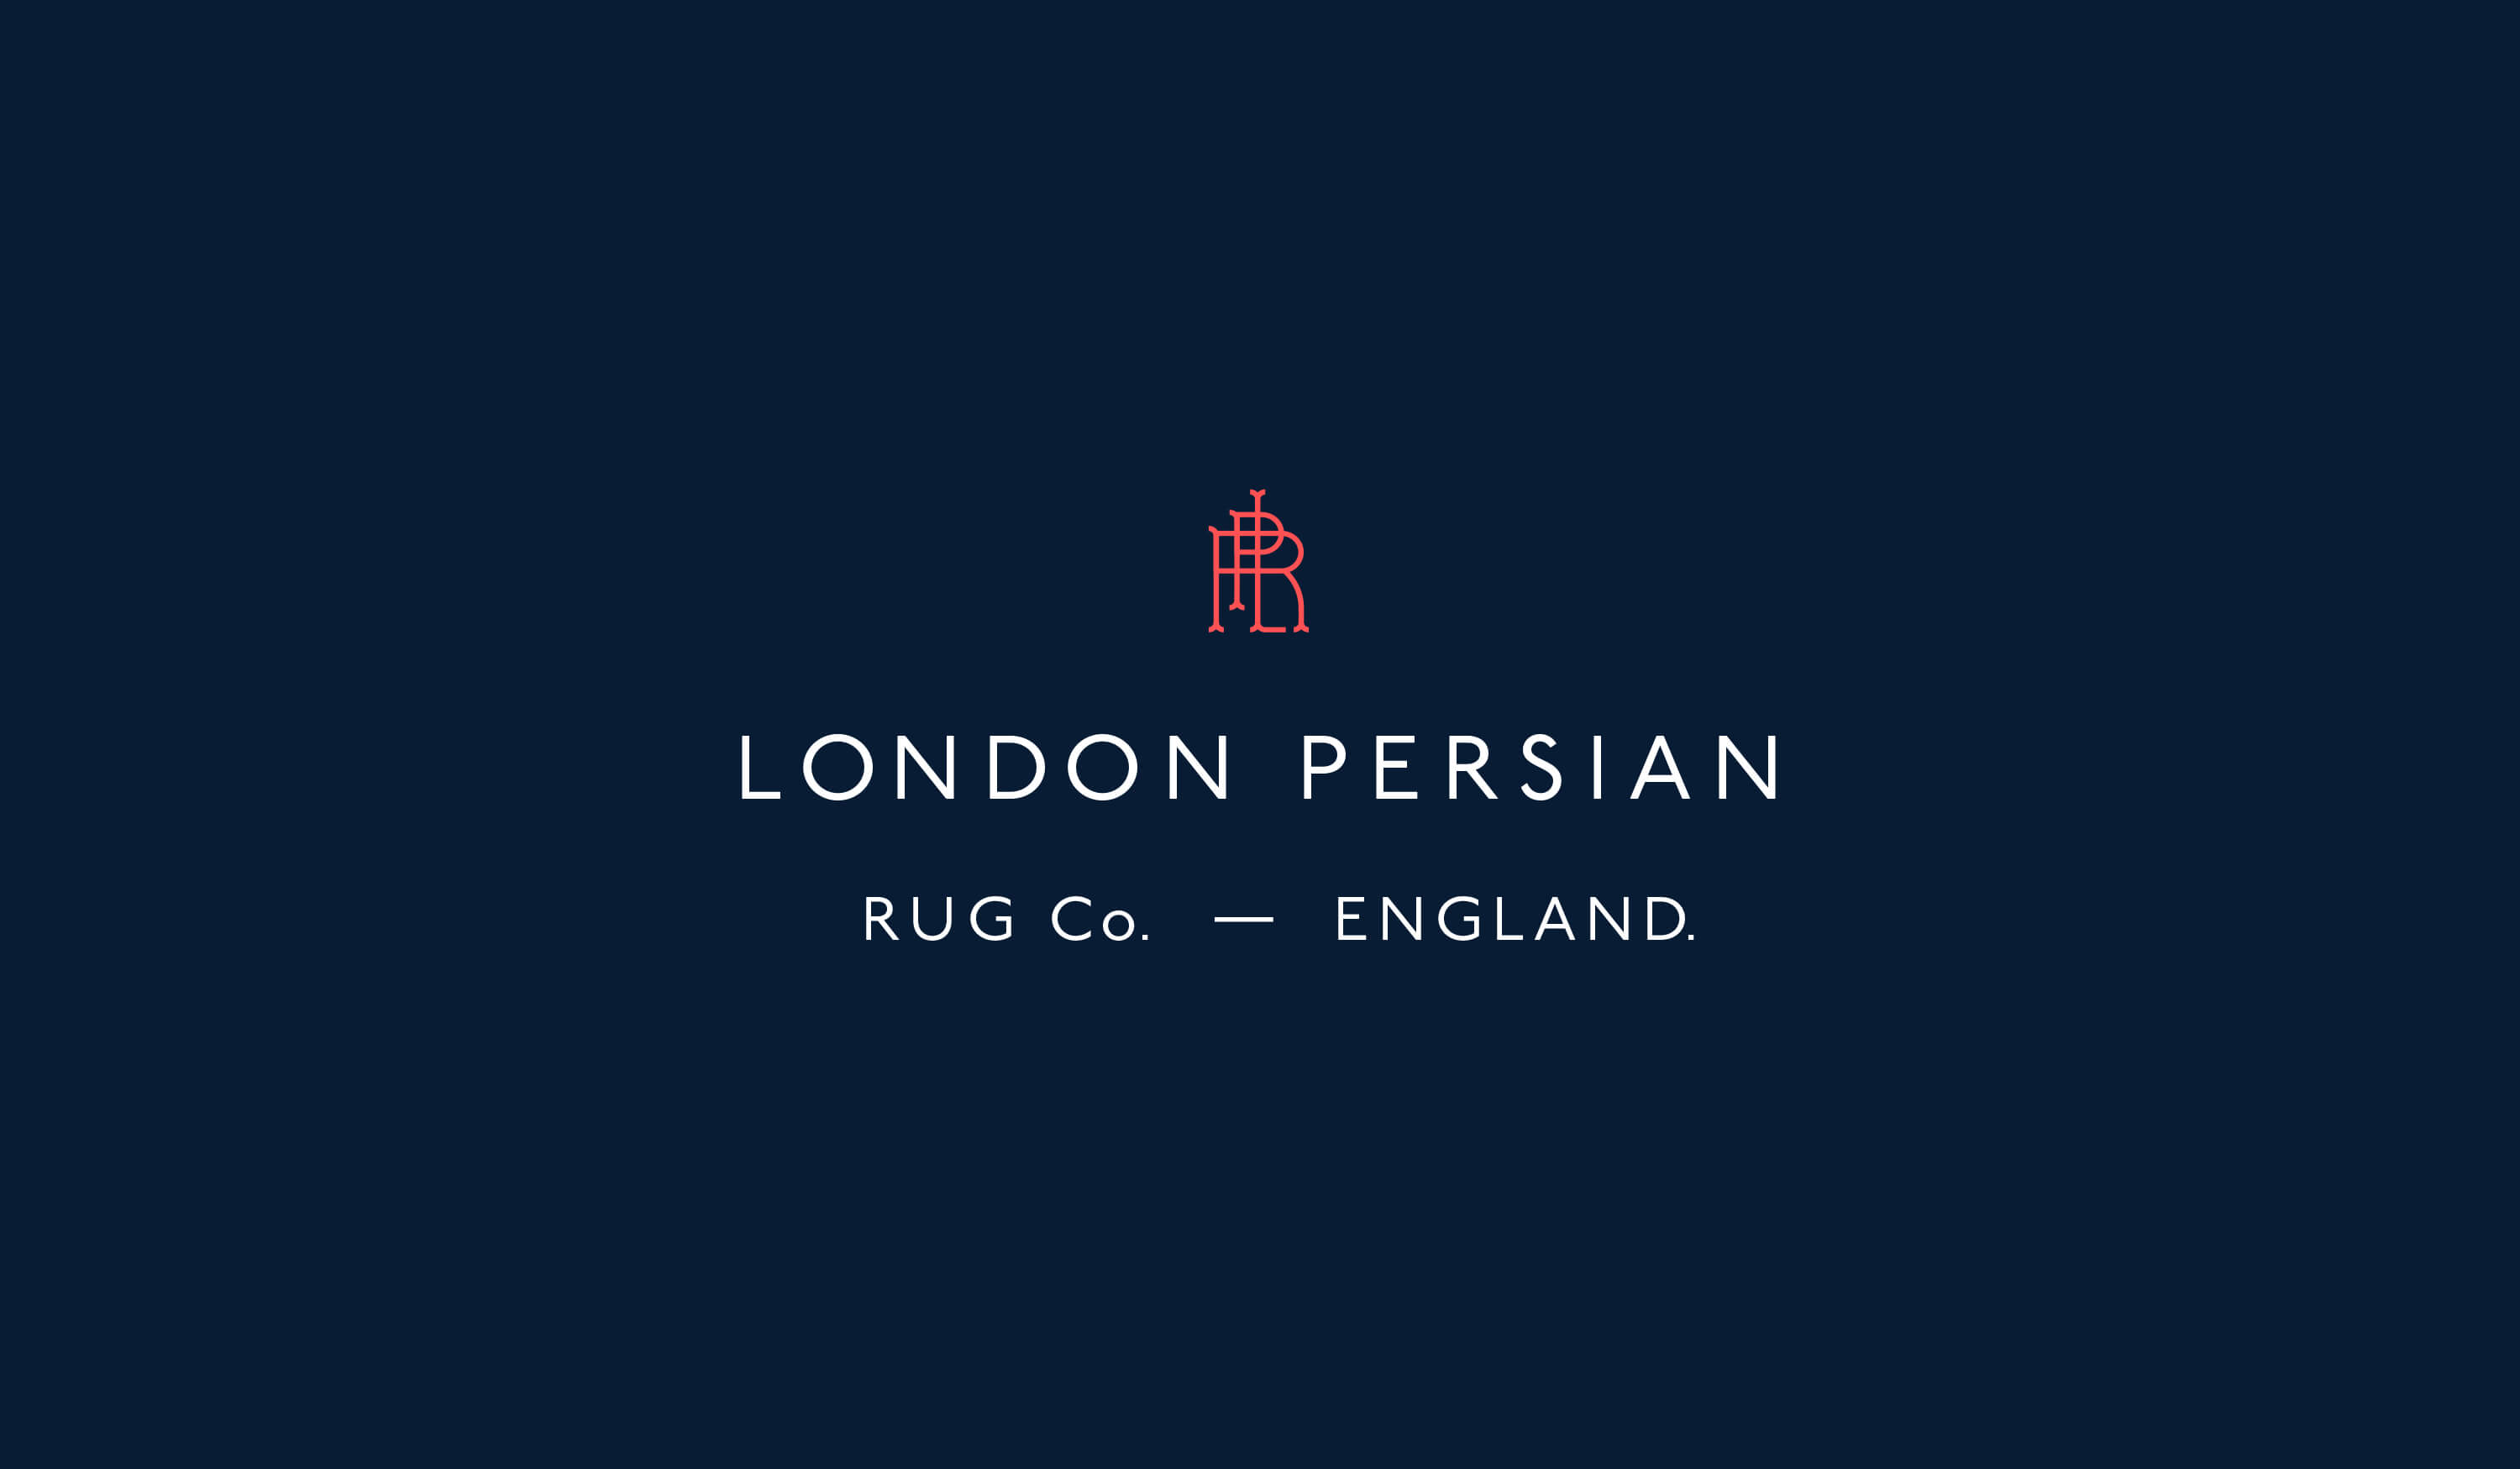 London Persian Rug Company - British brands by Deep, creative agency